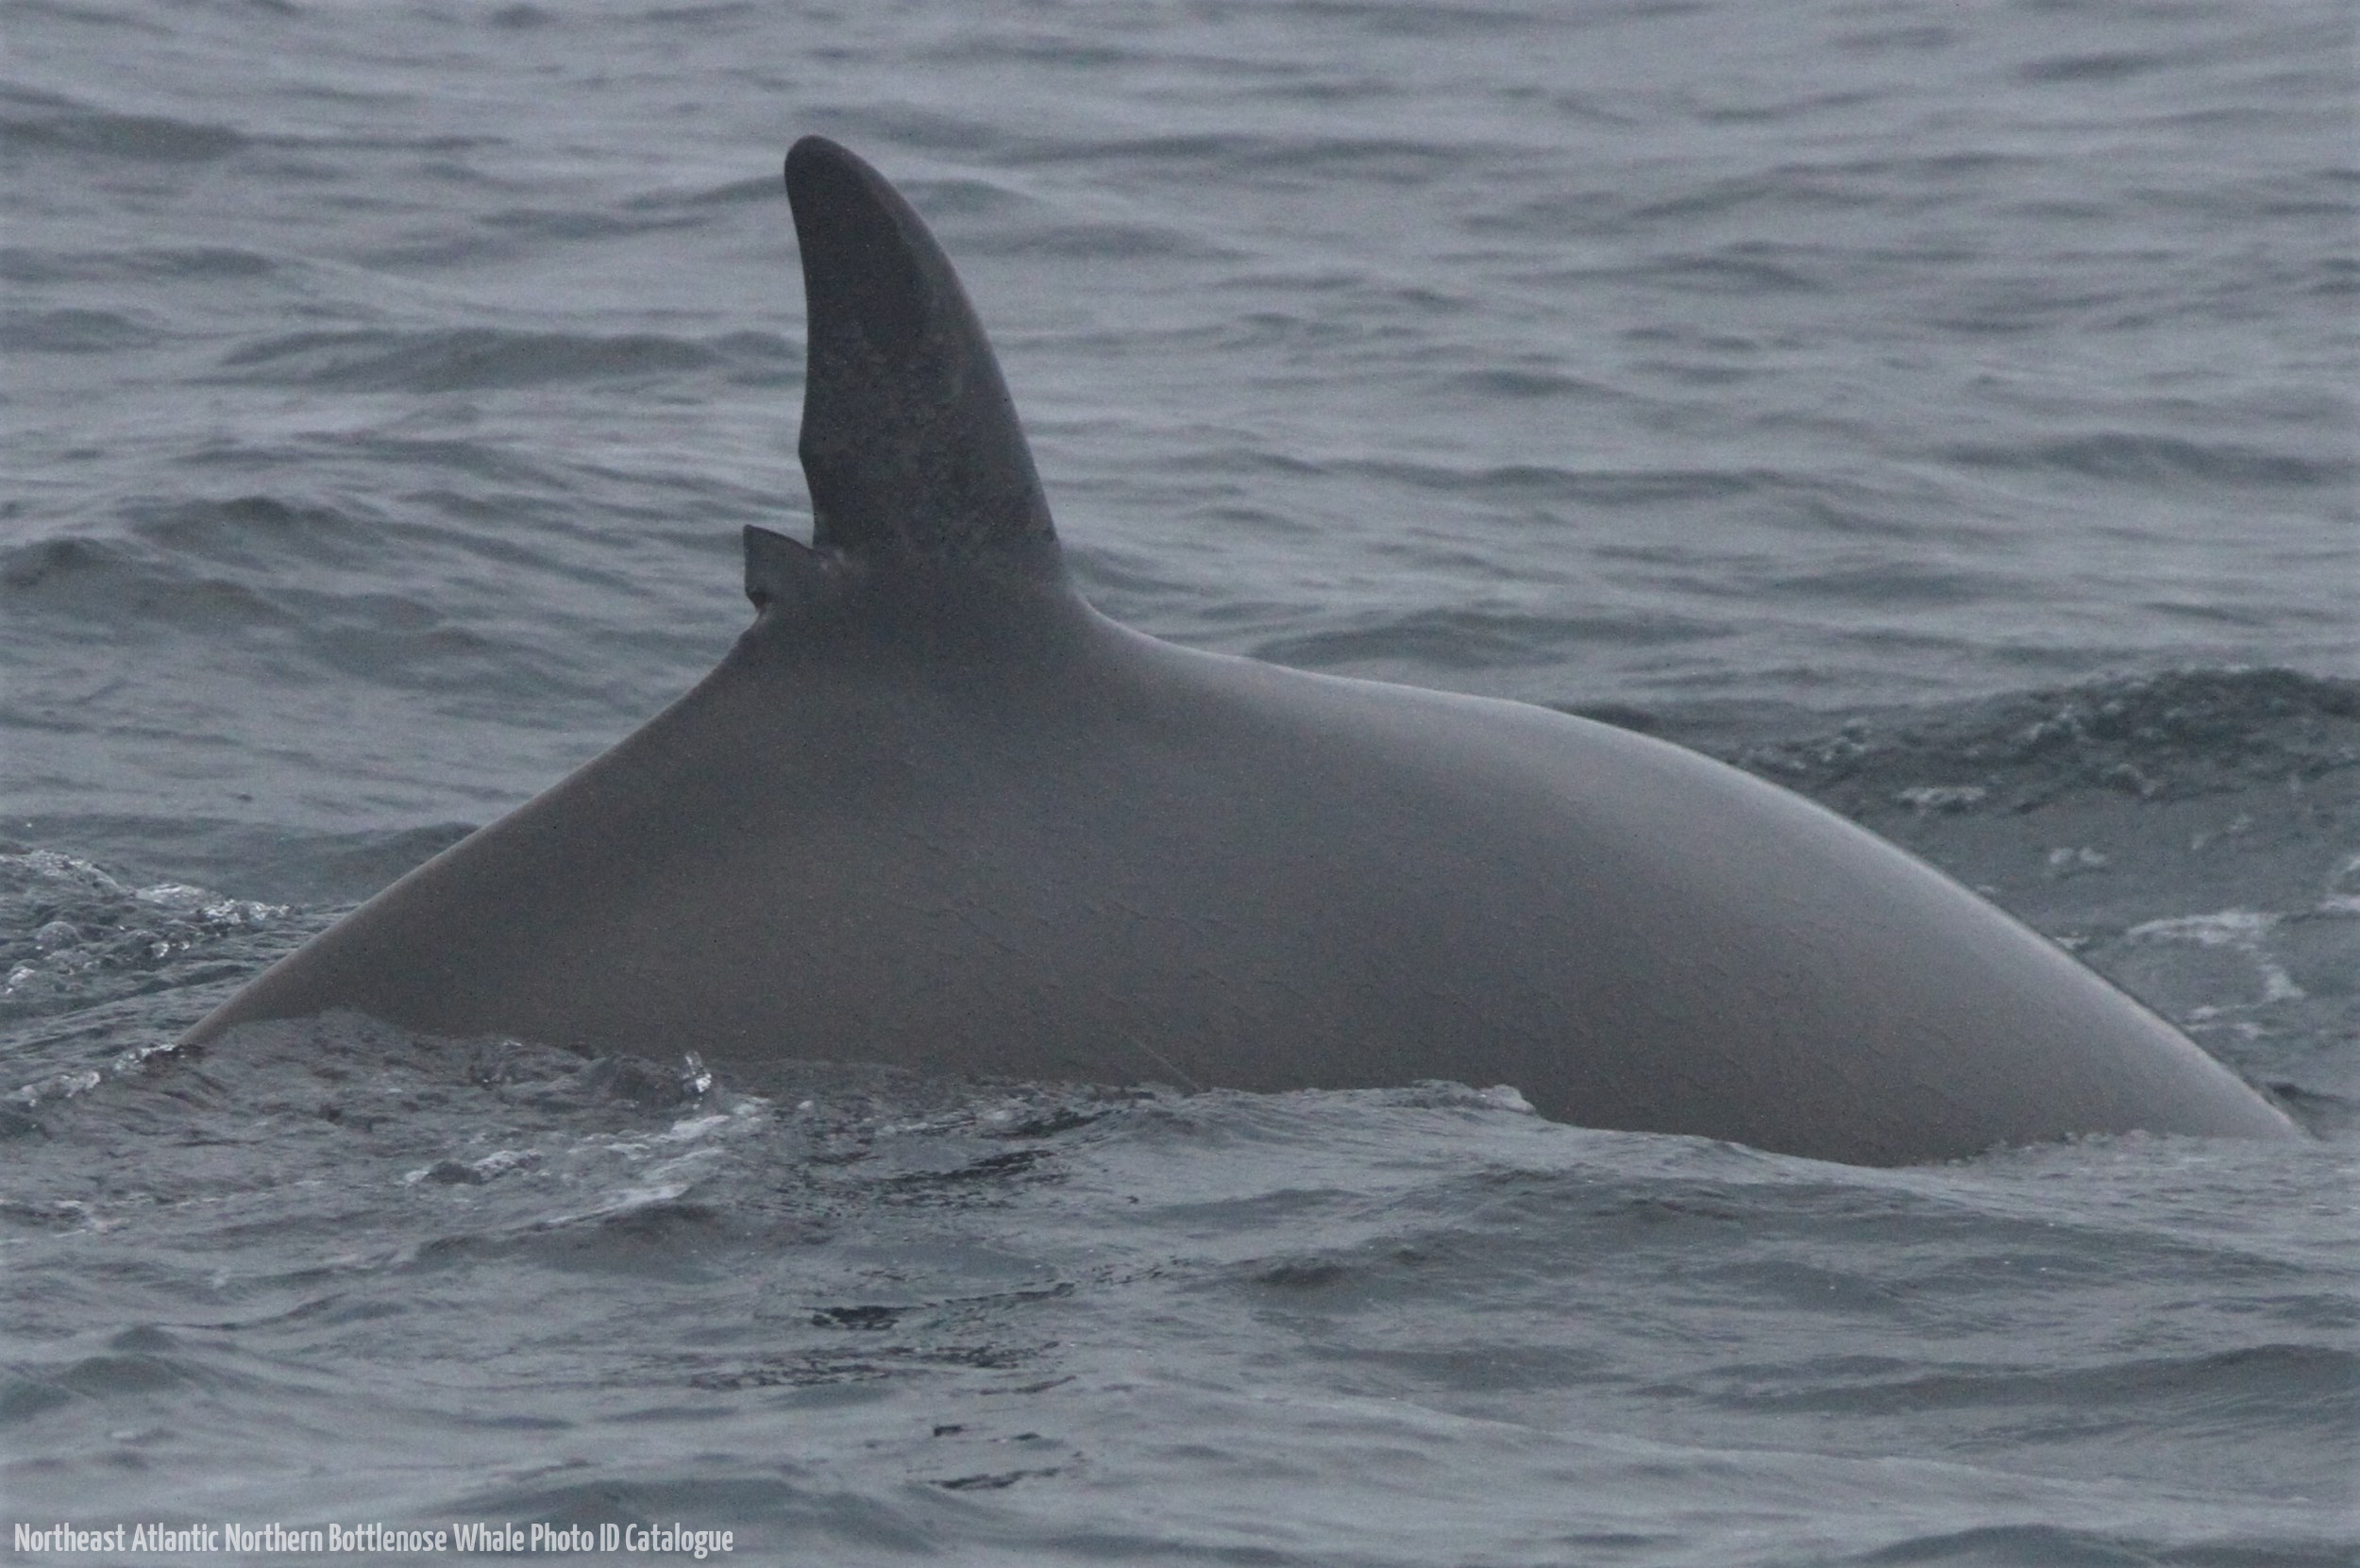 Whale ID: 0282,  Date taken: 09-07-2013,  Photographer: Paul H. Ensor